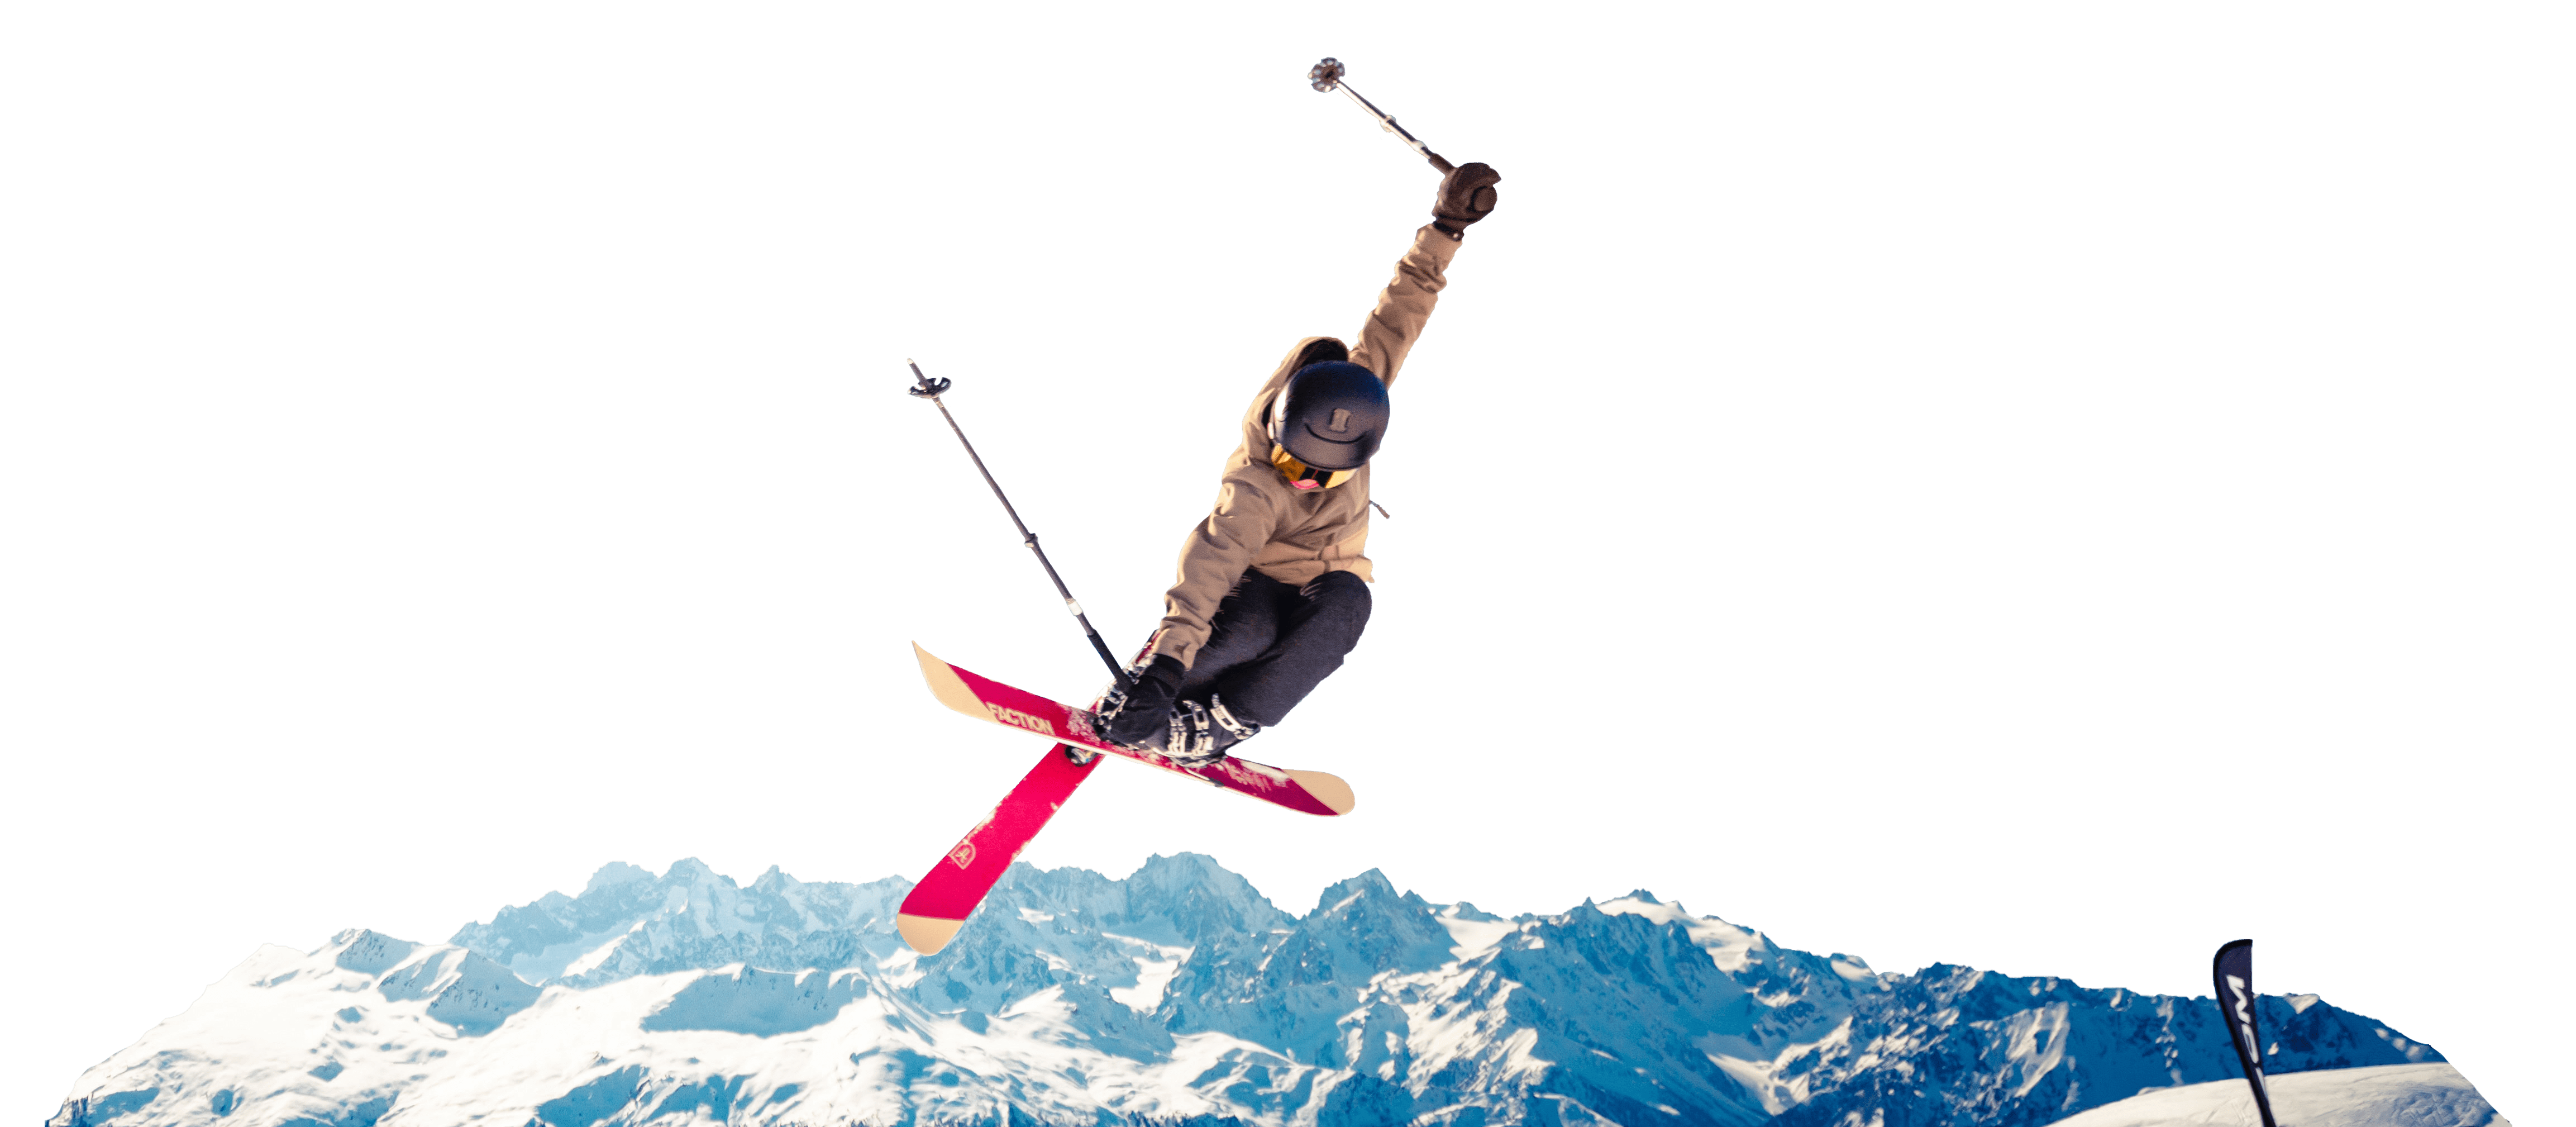 Boostability Utah ski culture